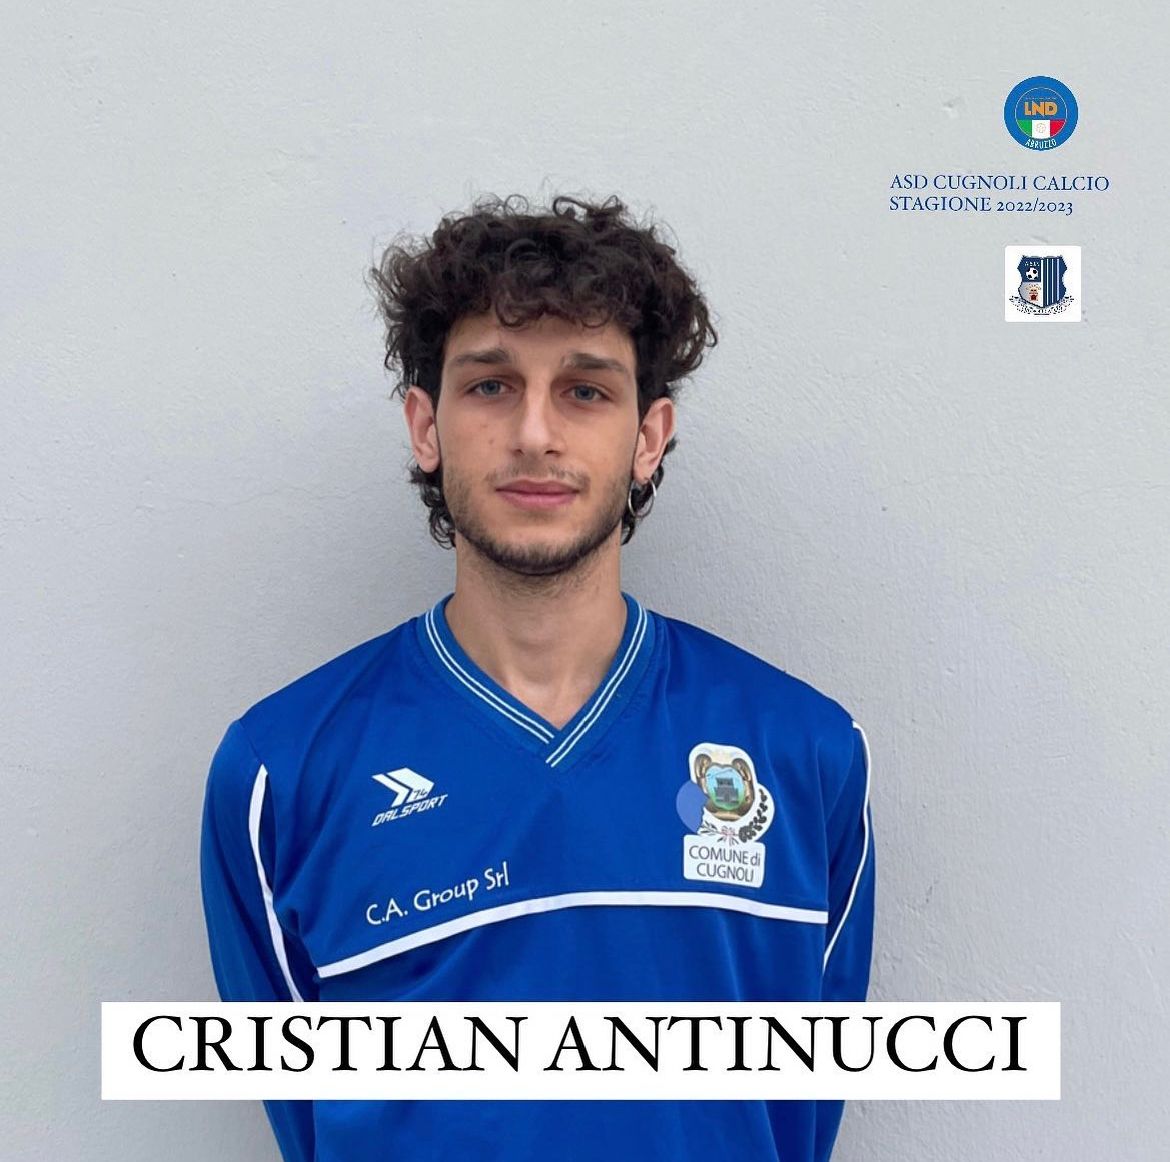 Cristian Antinucci